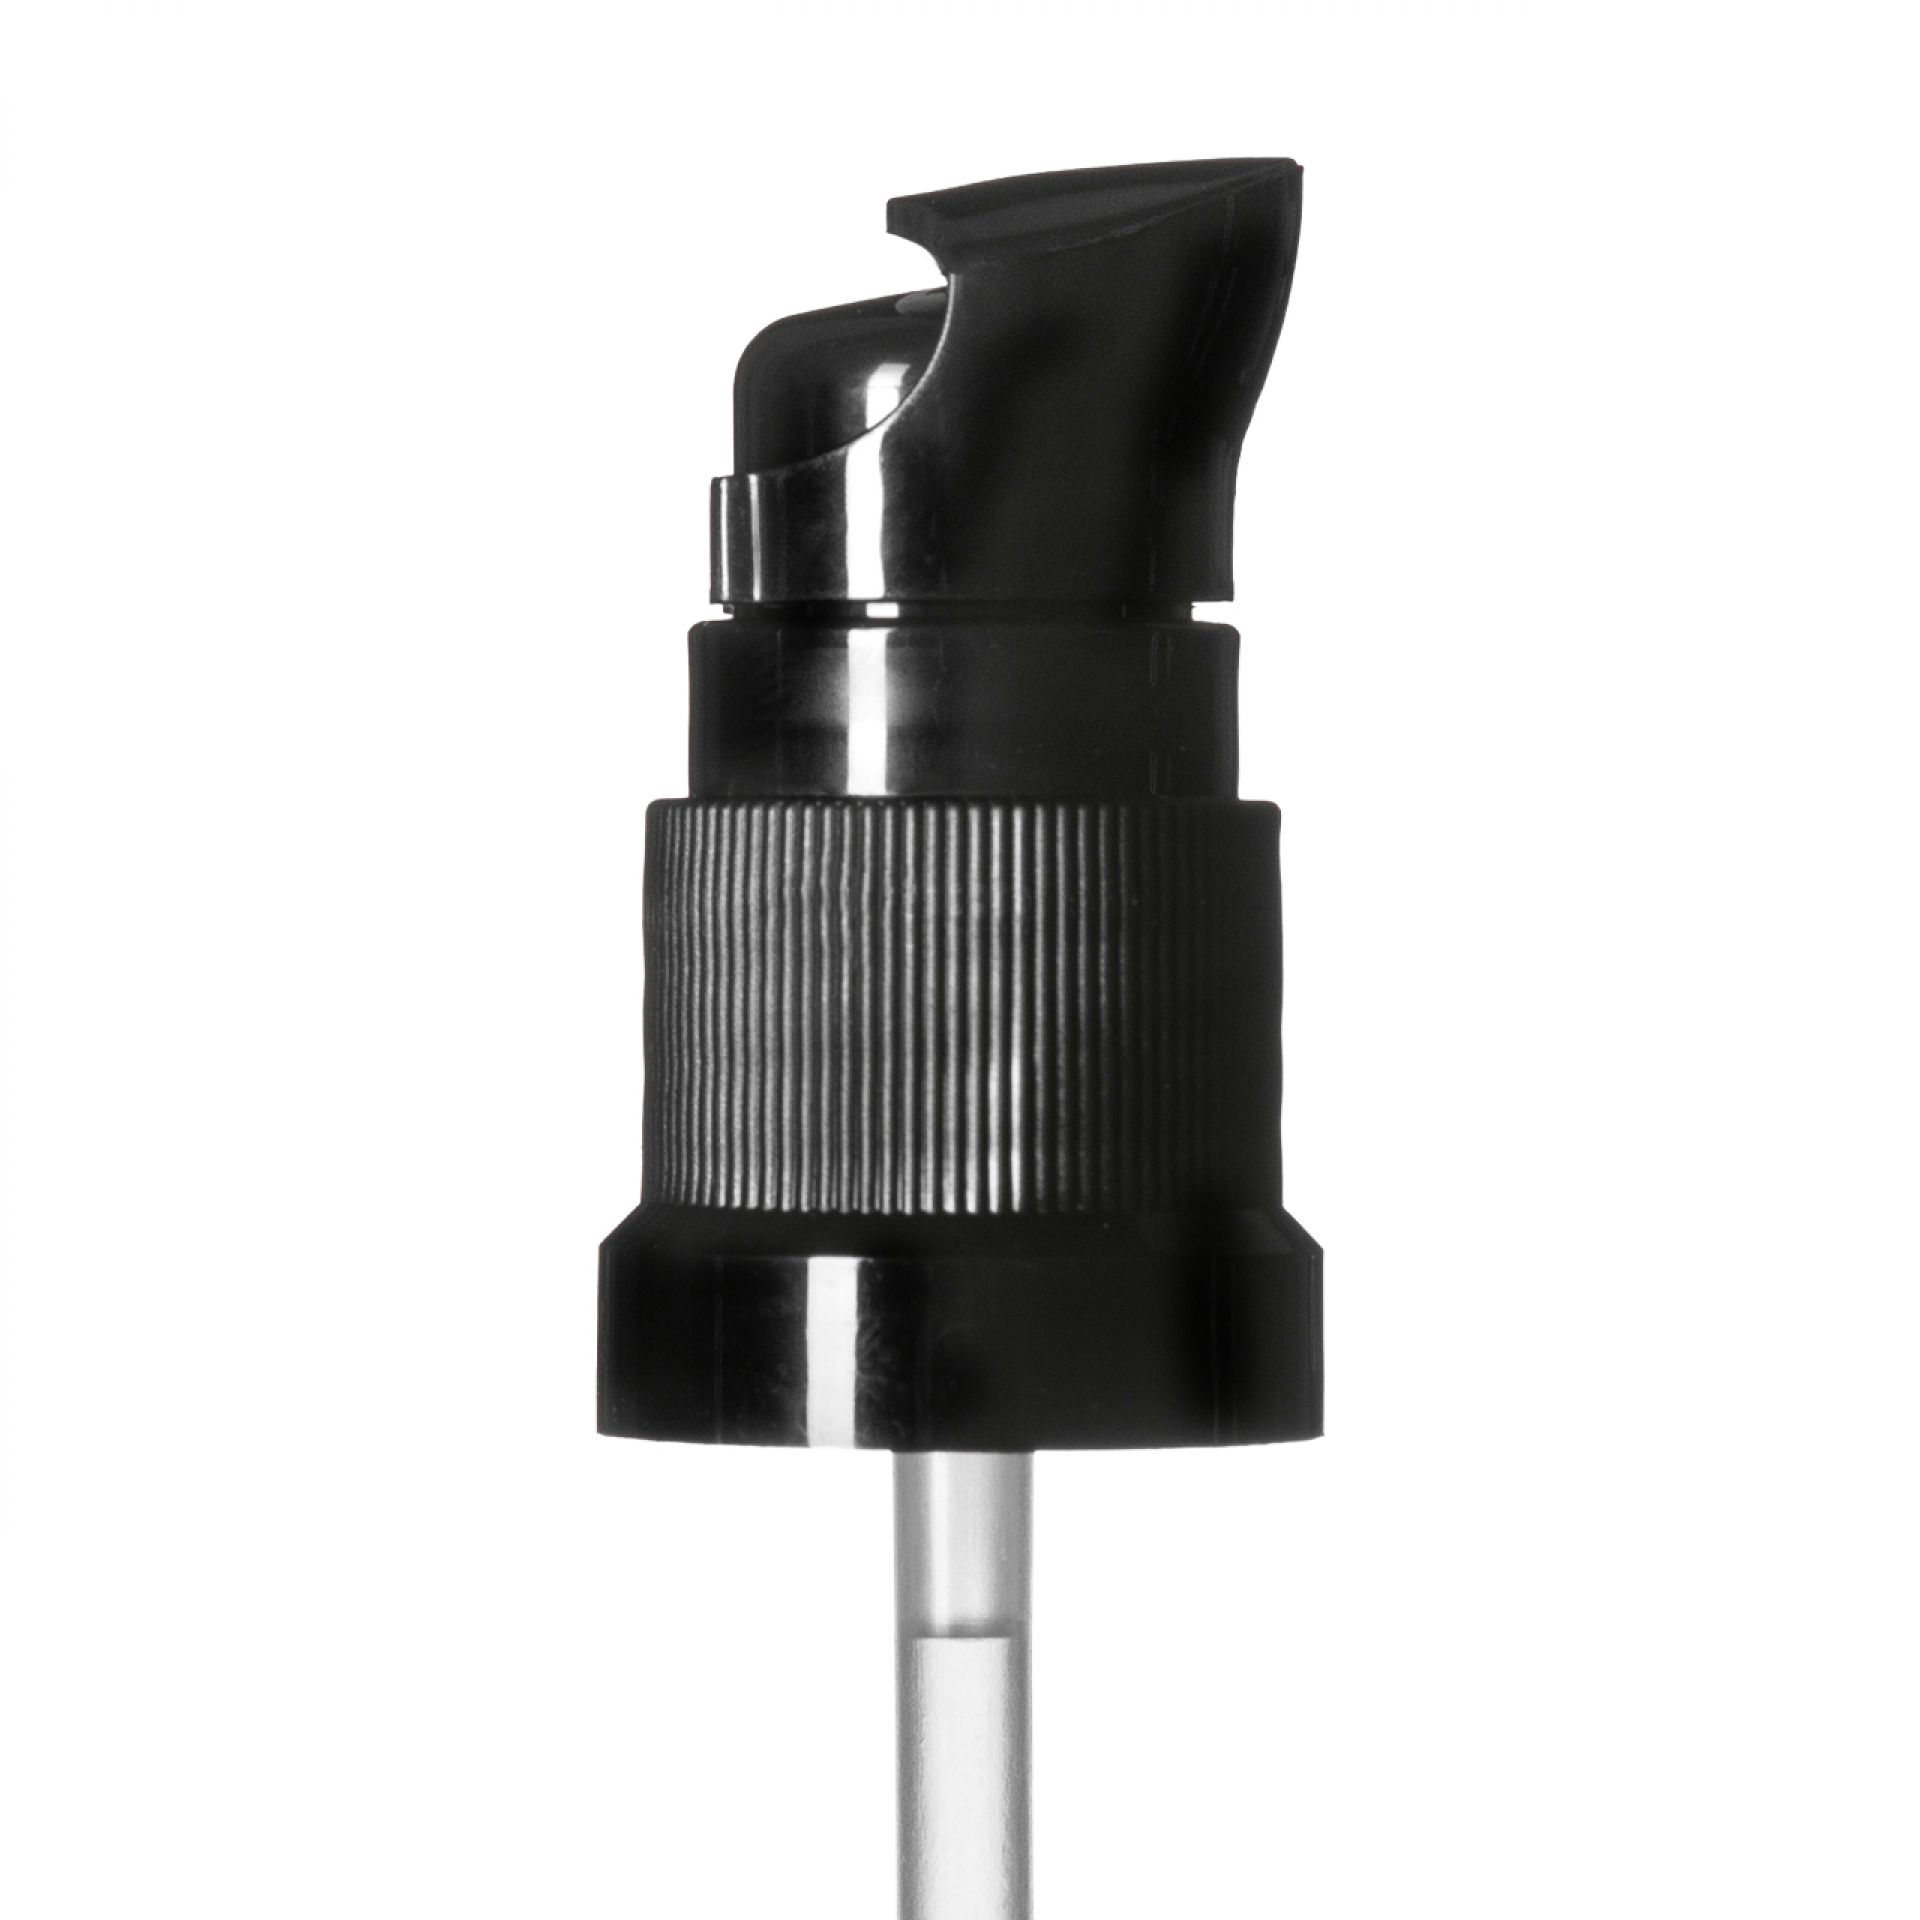 Lotion pump Metropolitan DIN18, PP, black, dose 0.10ml, black security clip (Orion 10-63)